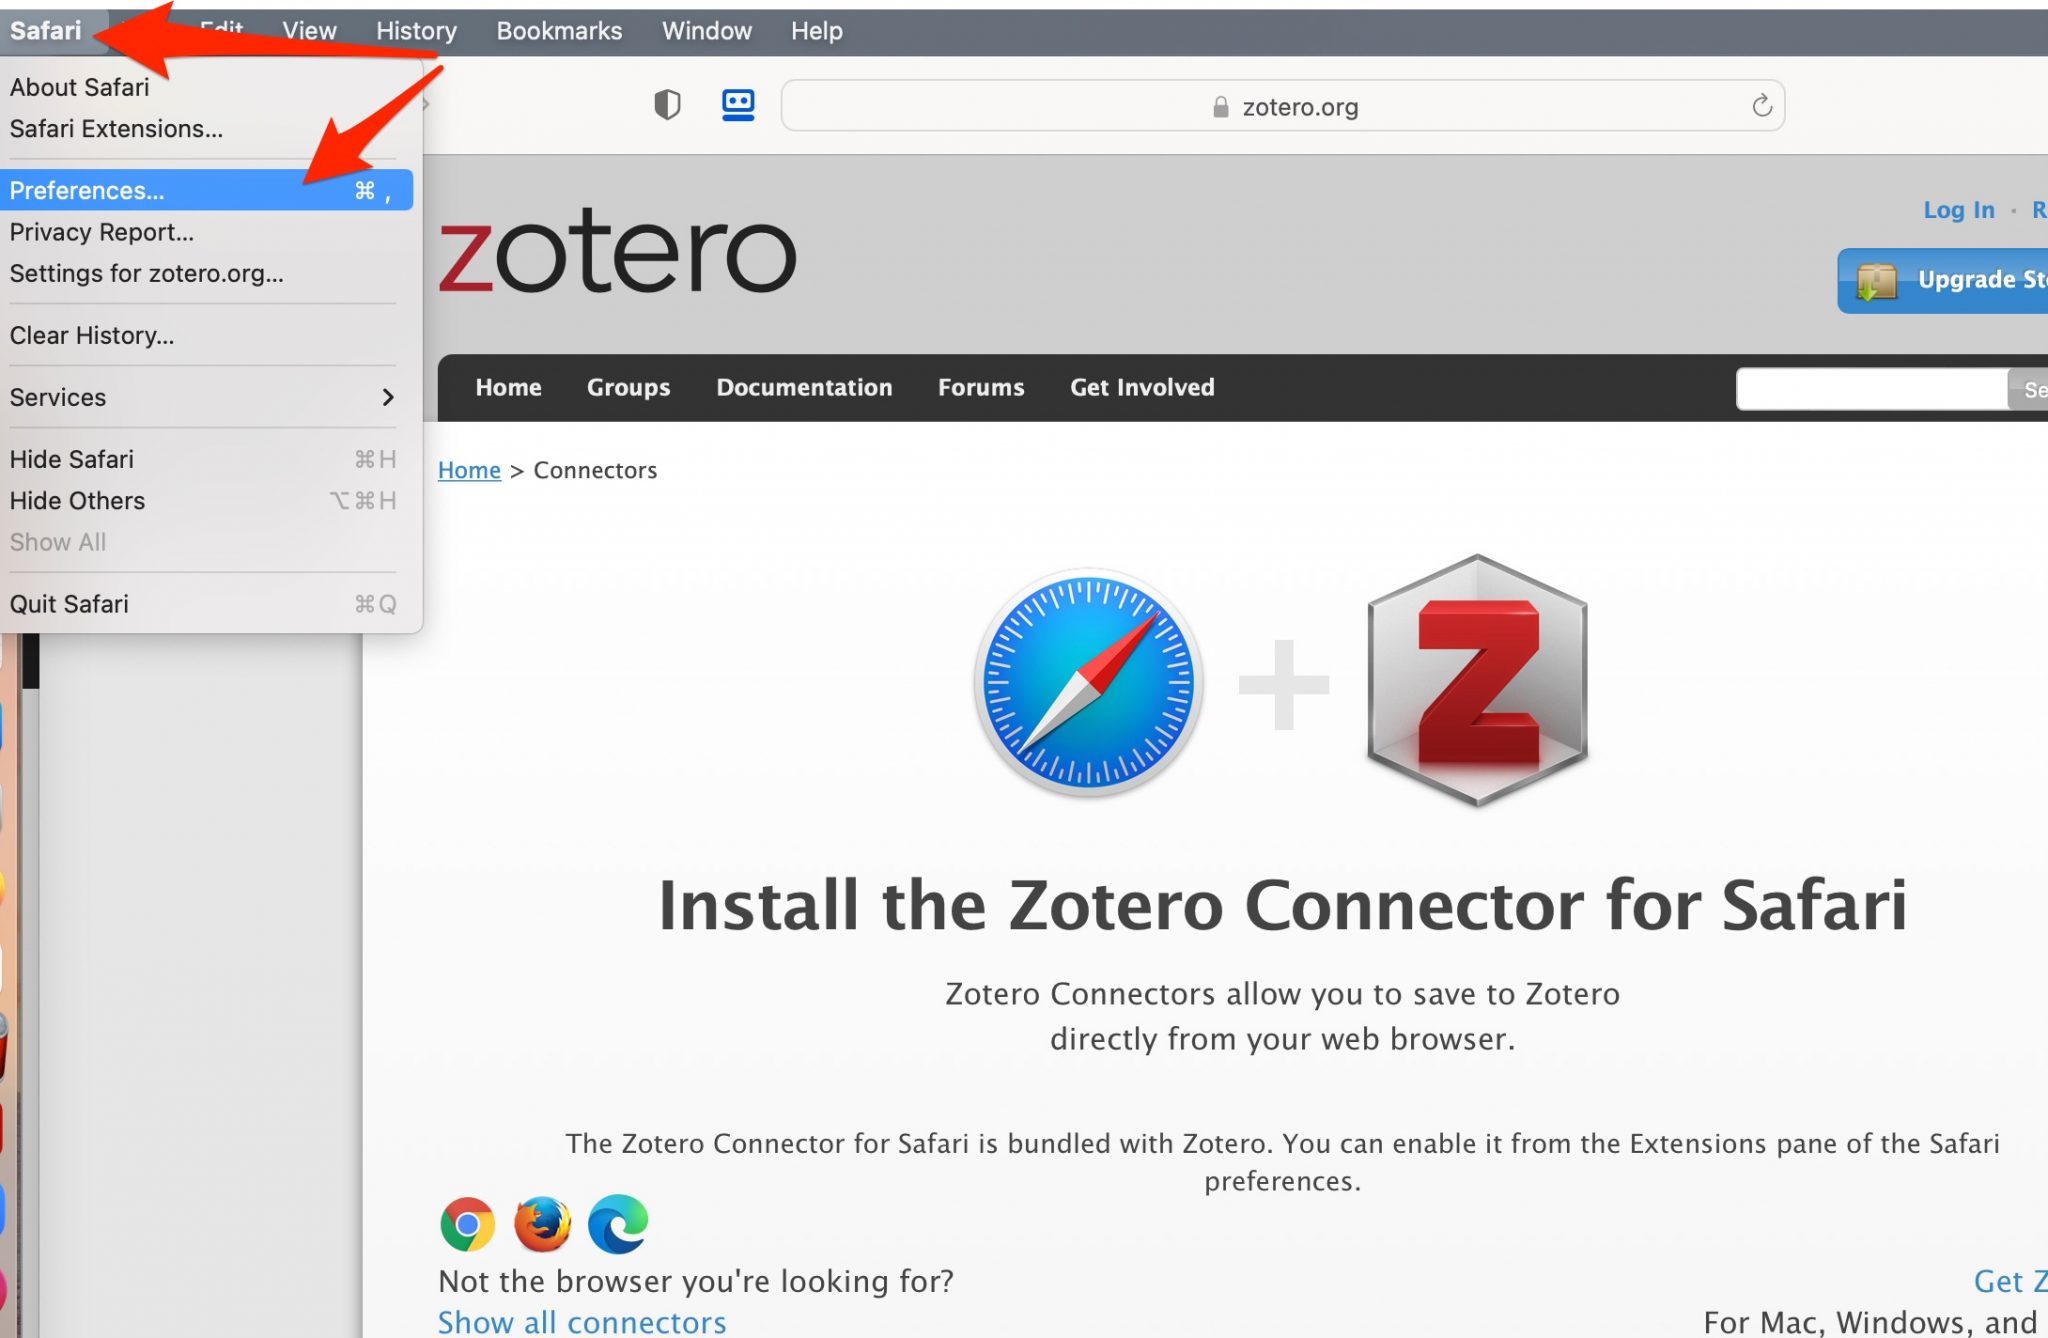 instaling Zotero 6.0.27